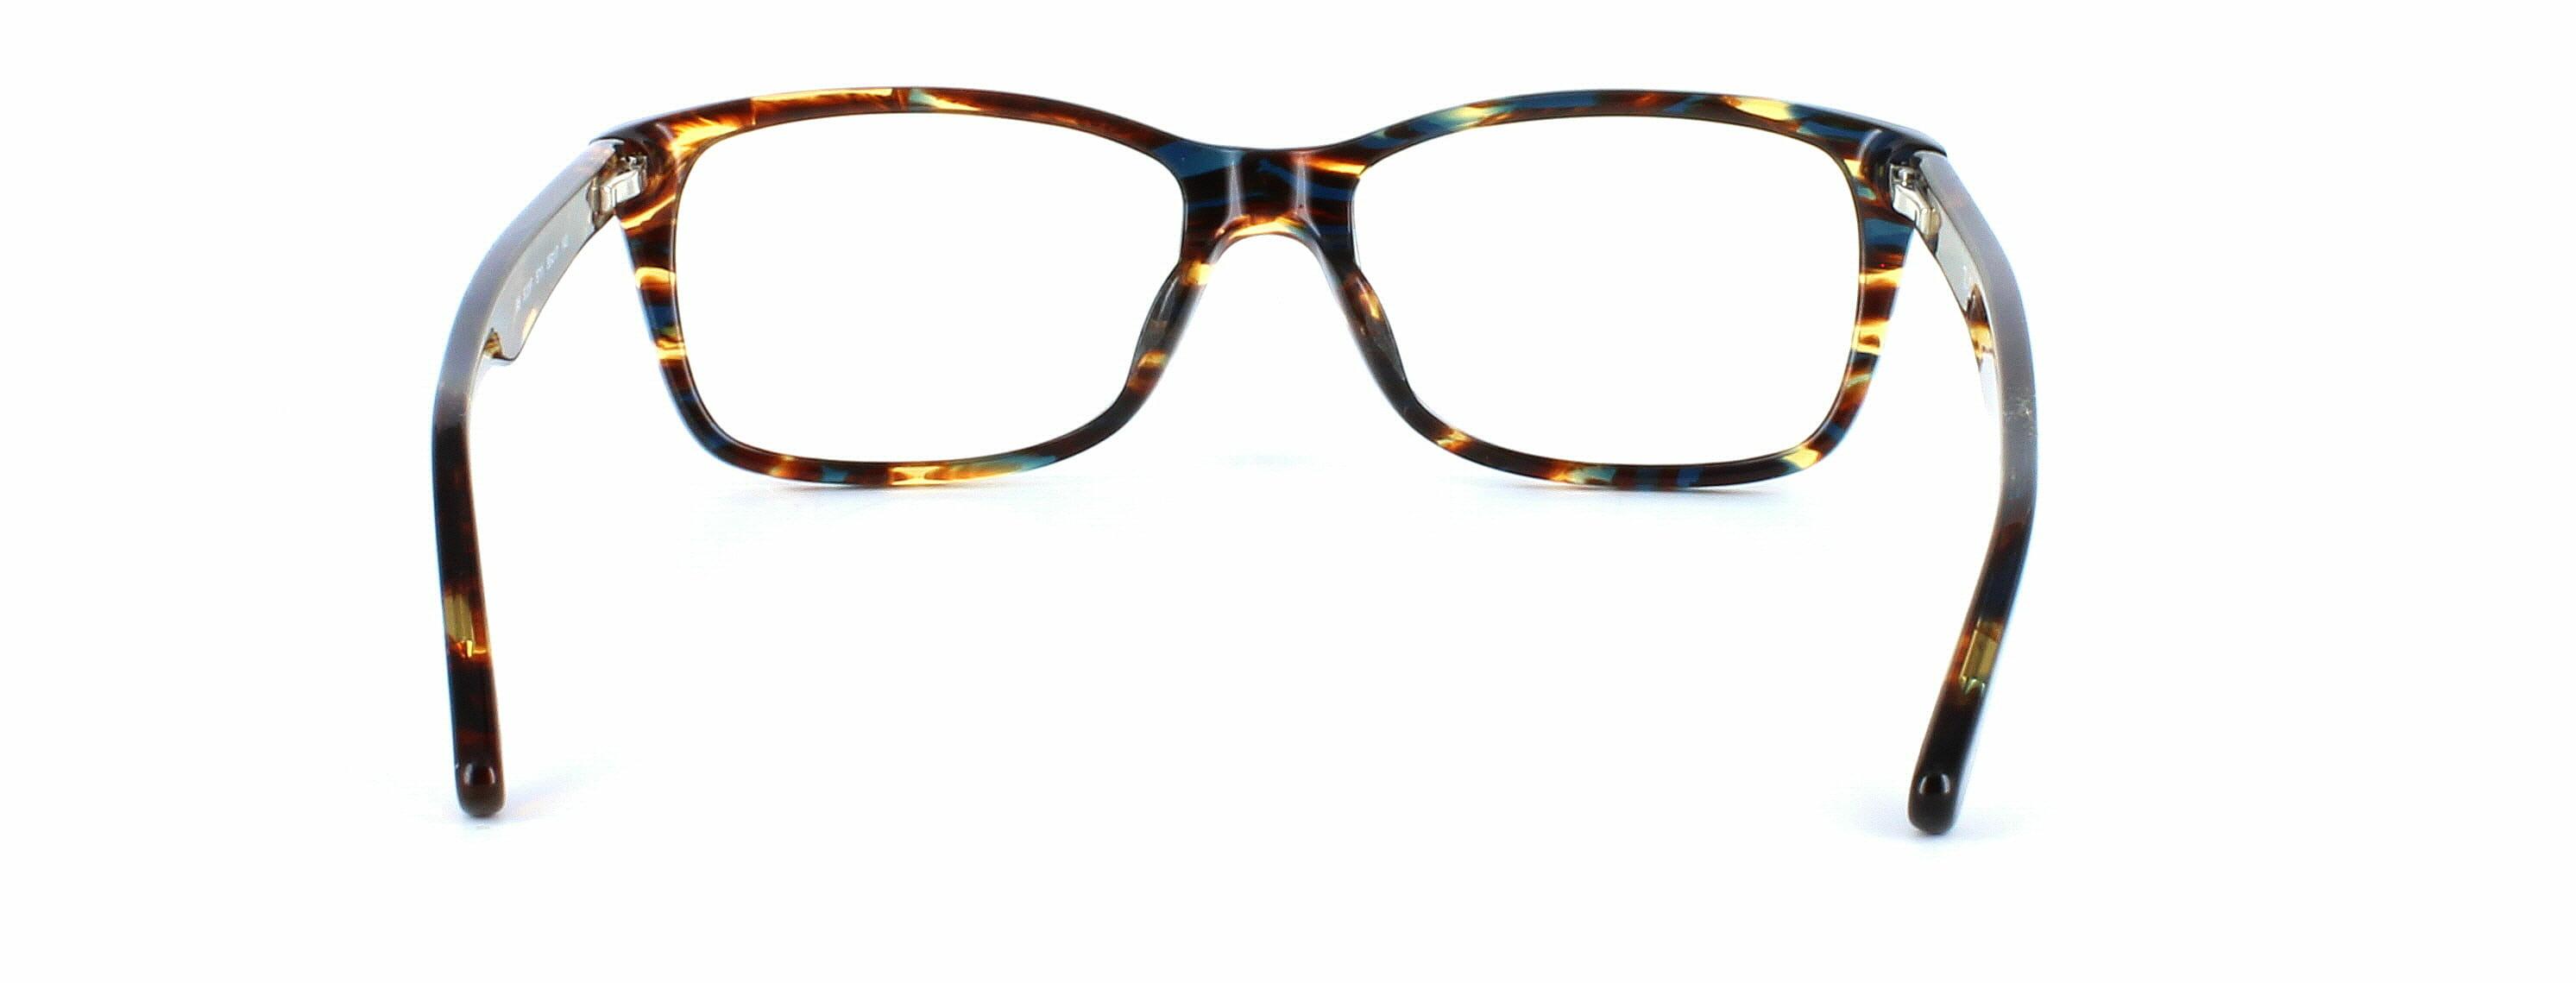 Ray Ban 5228 5711 Tortoise | Glasses Online | Glasses2You